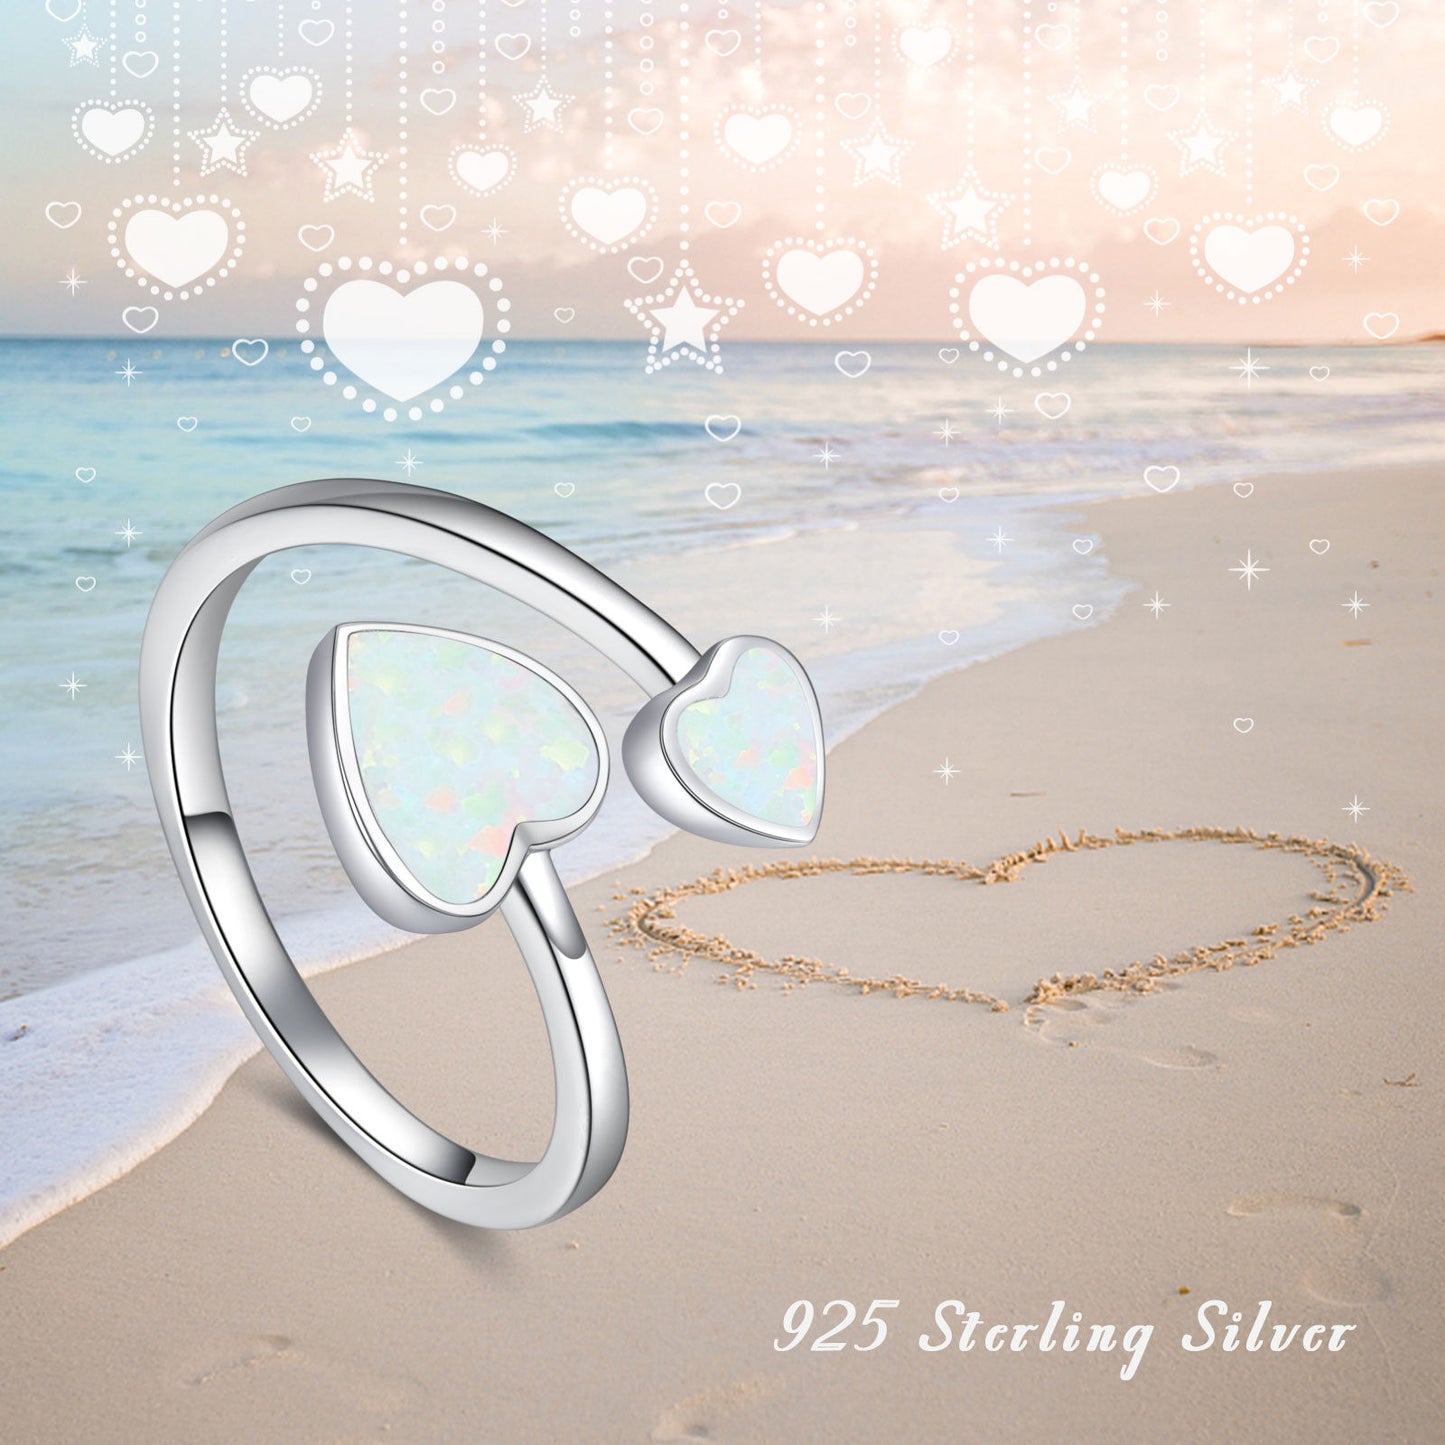 8mm Opal Heart Adjustable Open Ring in 925 Sterling Silver